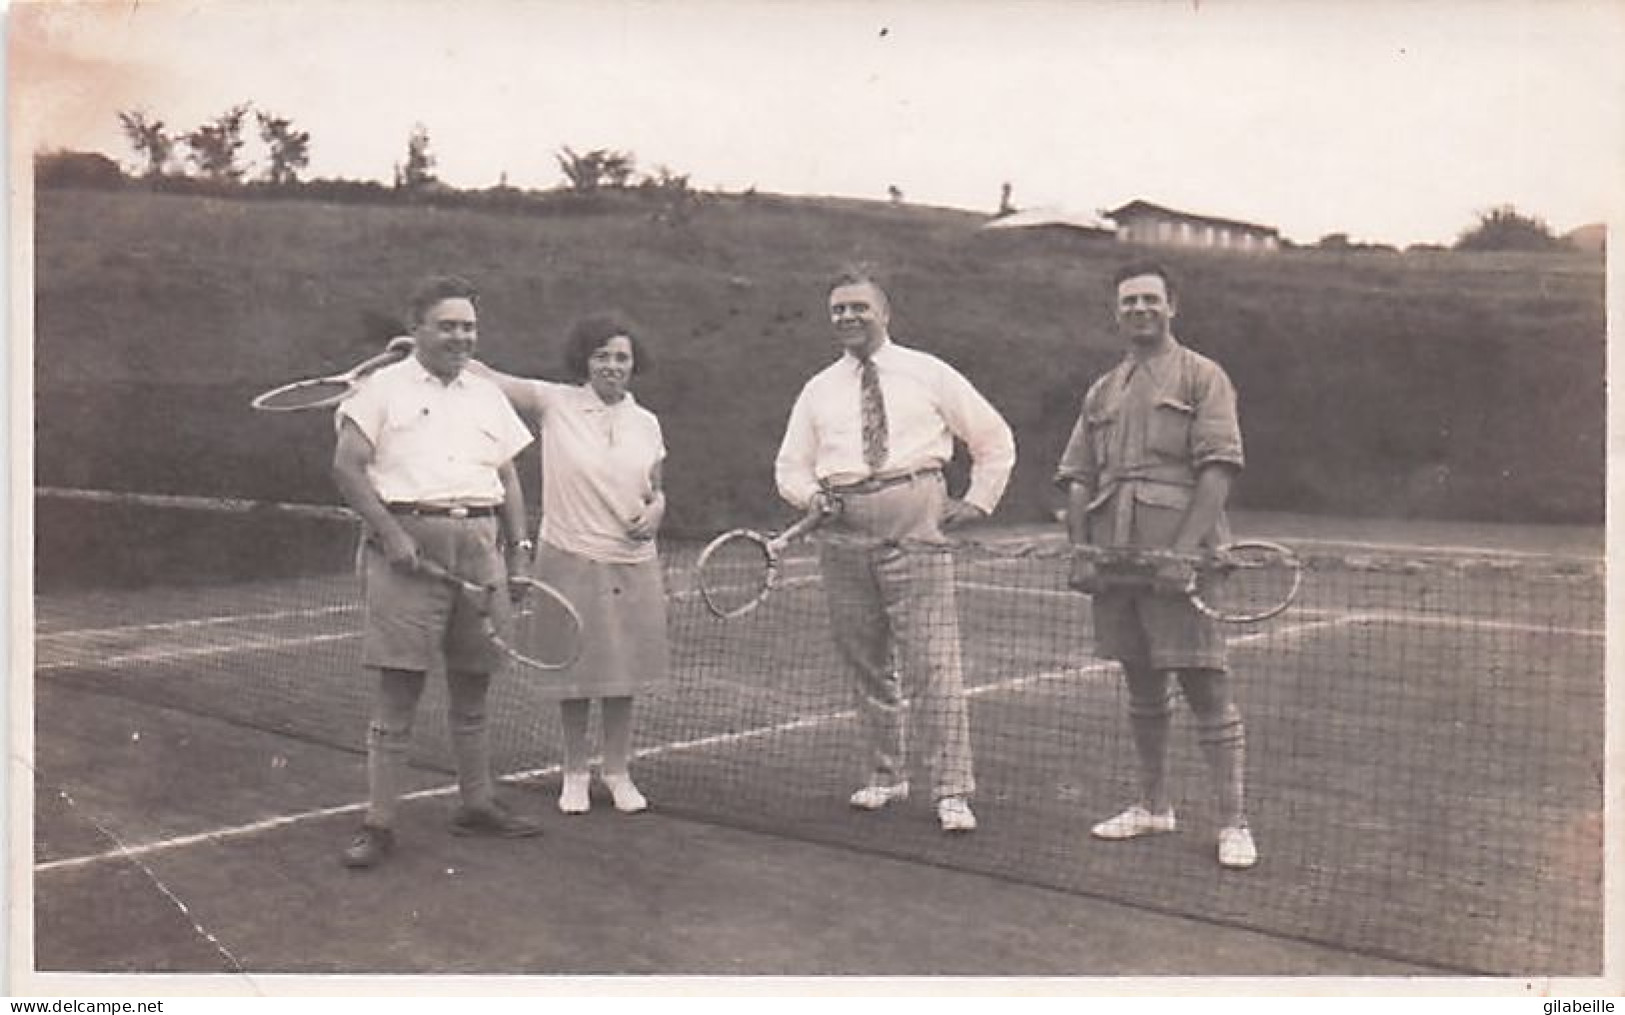 Tennis - Photo Originale 1954 - La Pose Photo Avant La Rencontre - Sports